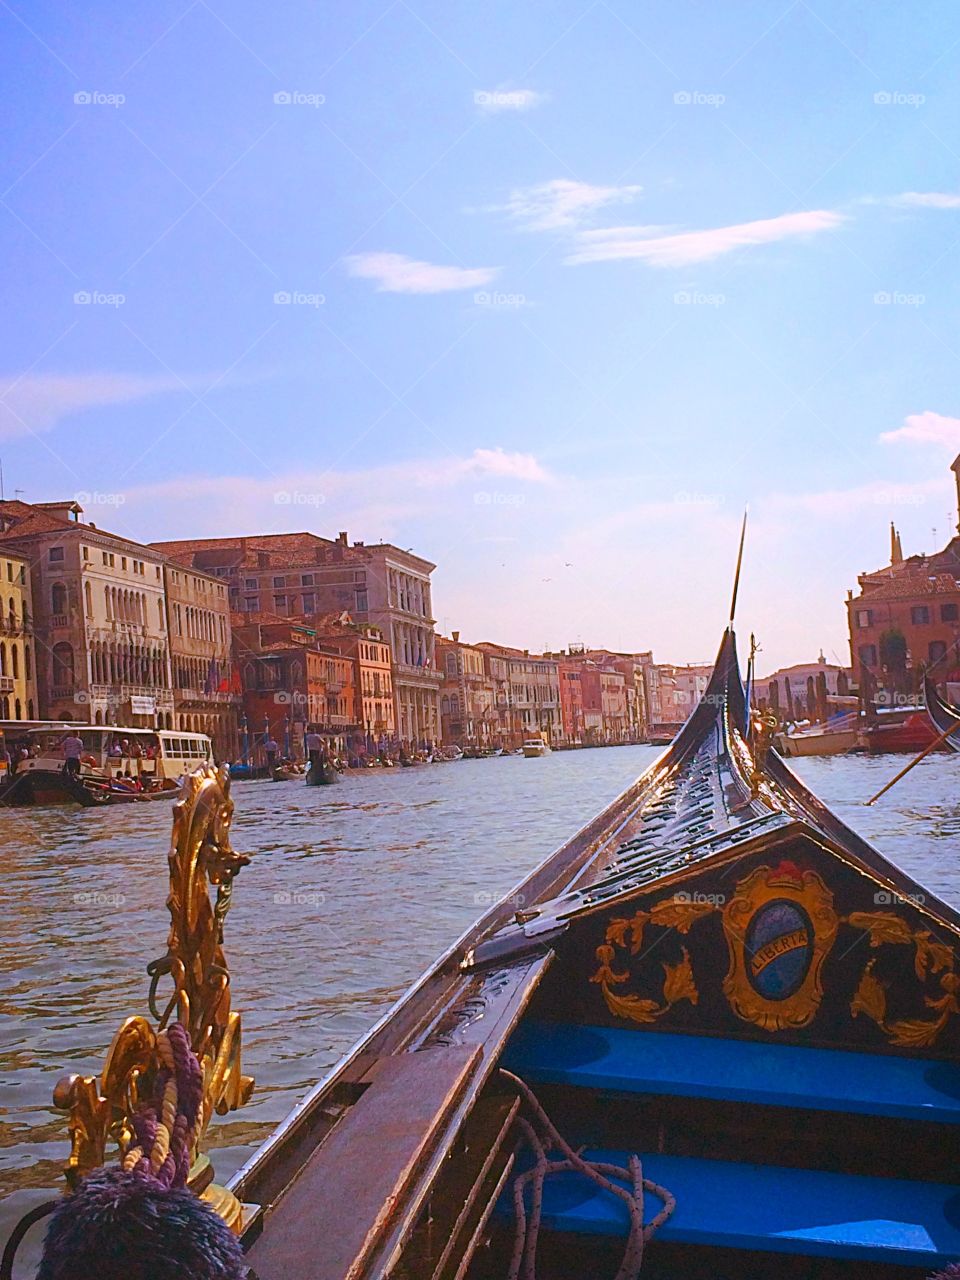 Venice by gondola 